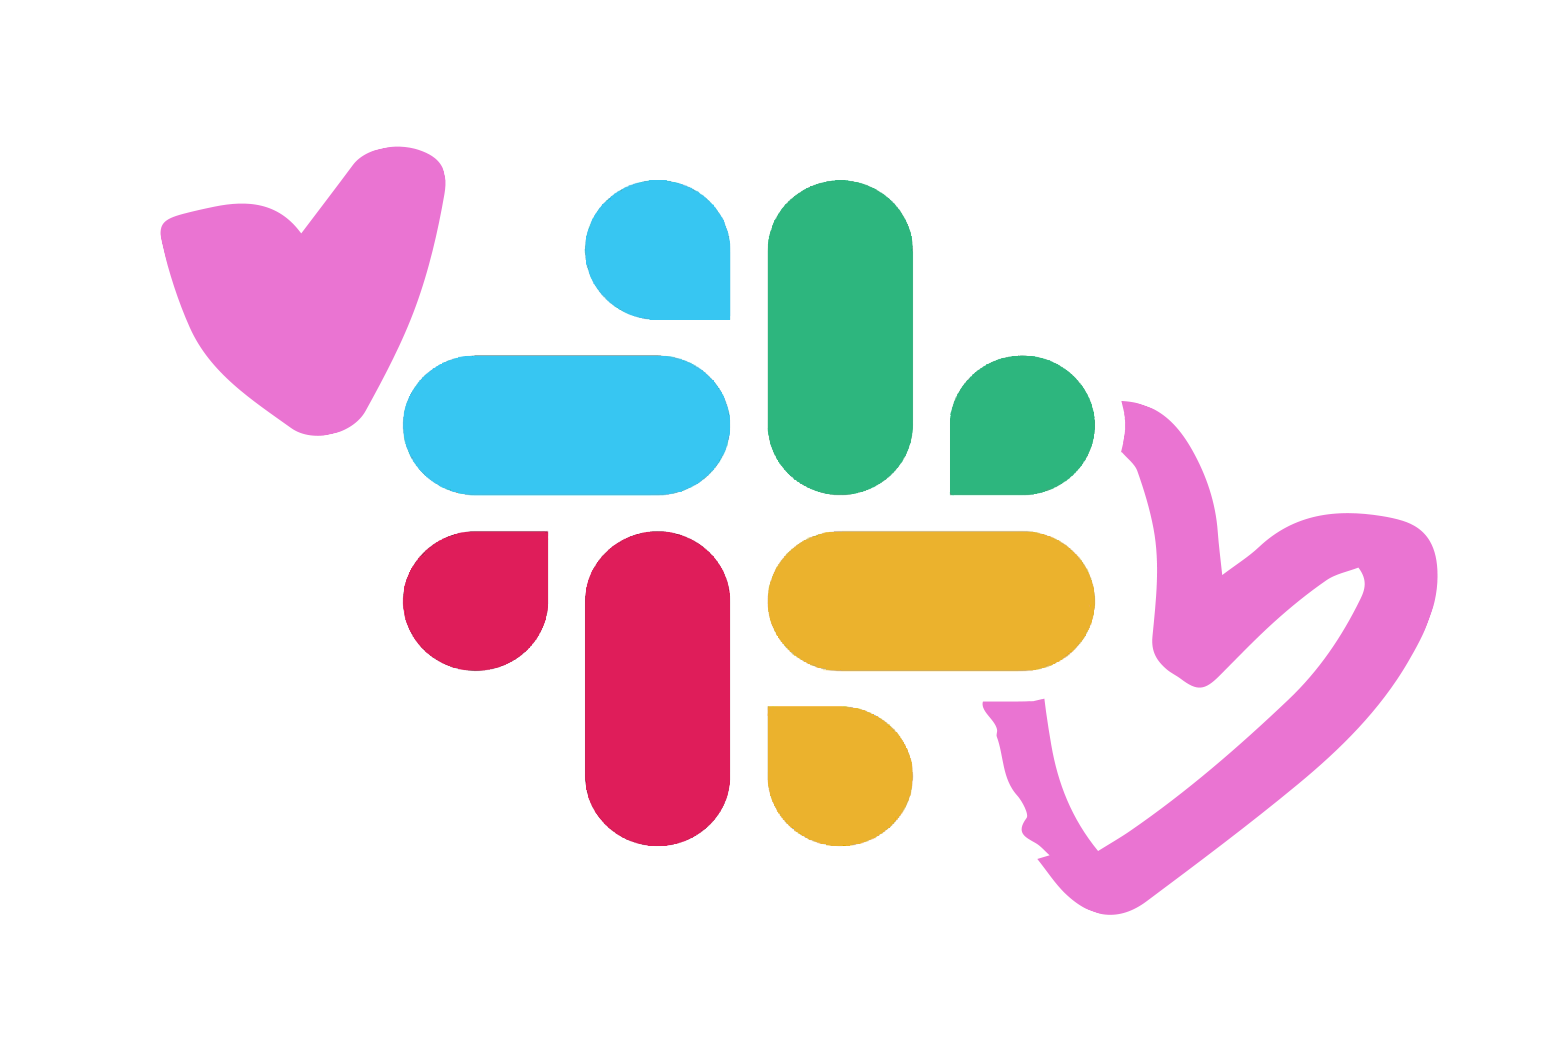 The Slack logo with hearts around it.